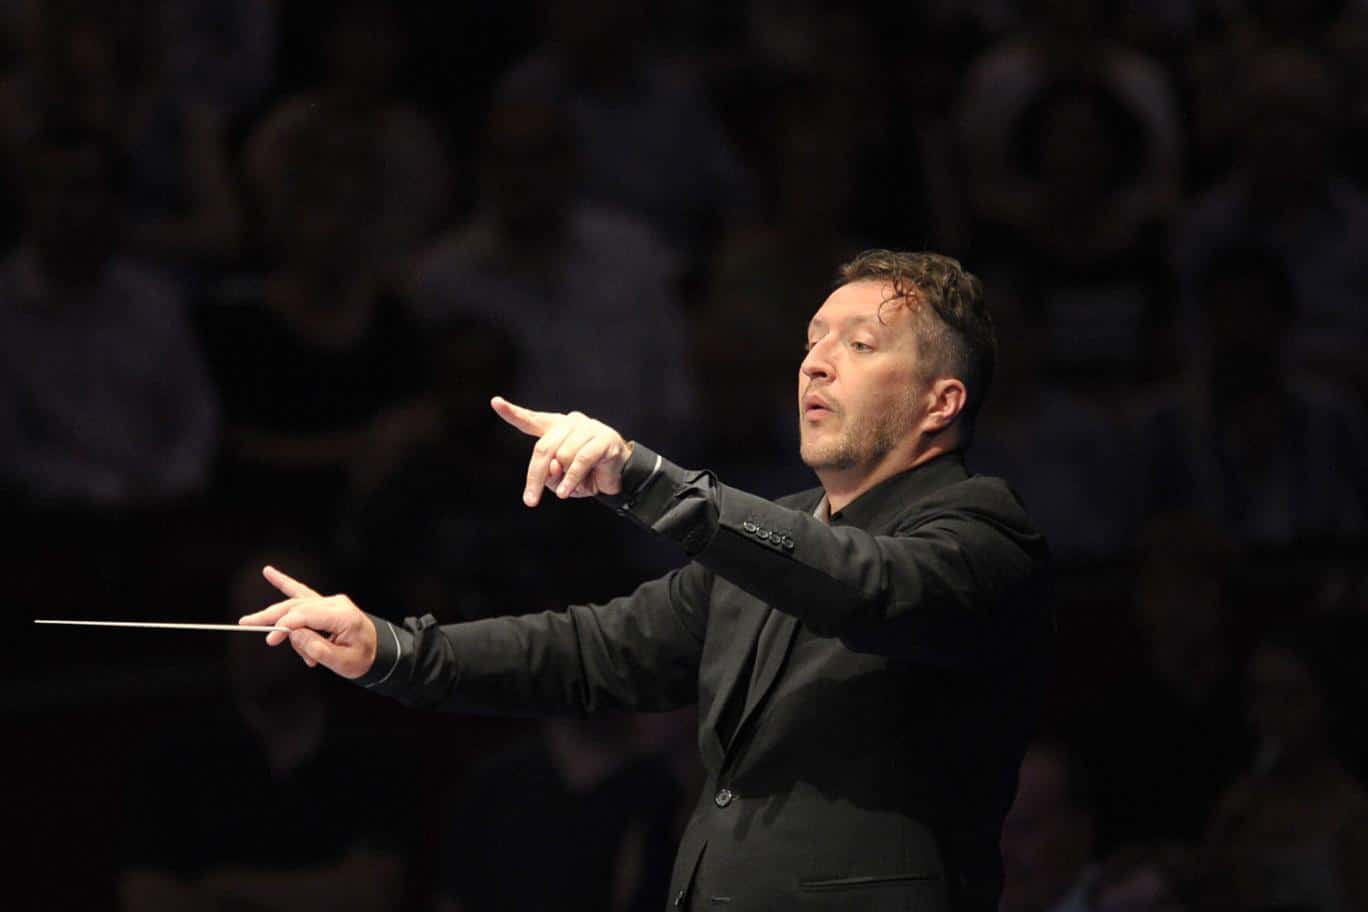 An English composer makes his Vienna Philharmonic debut